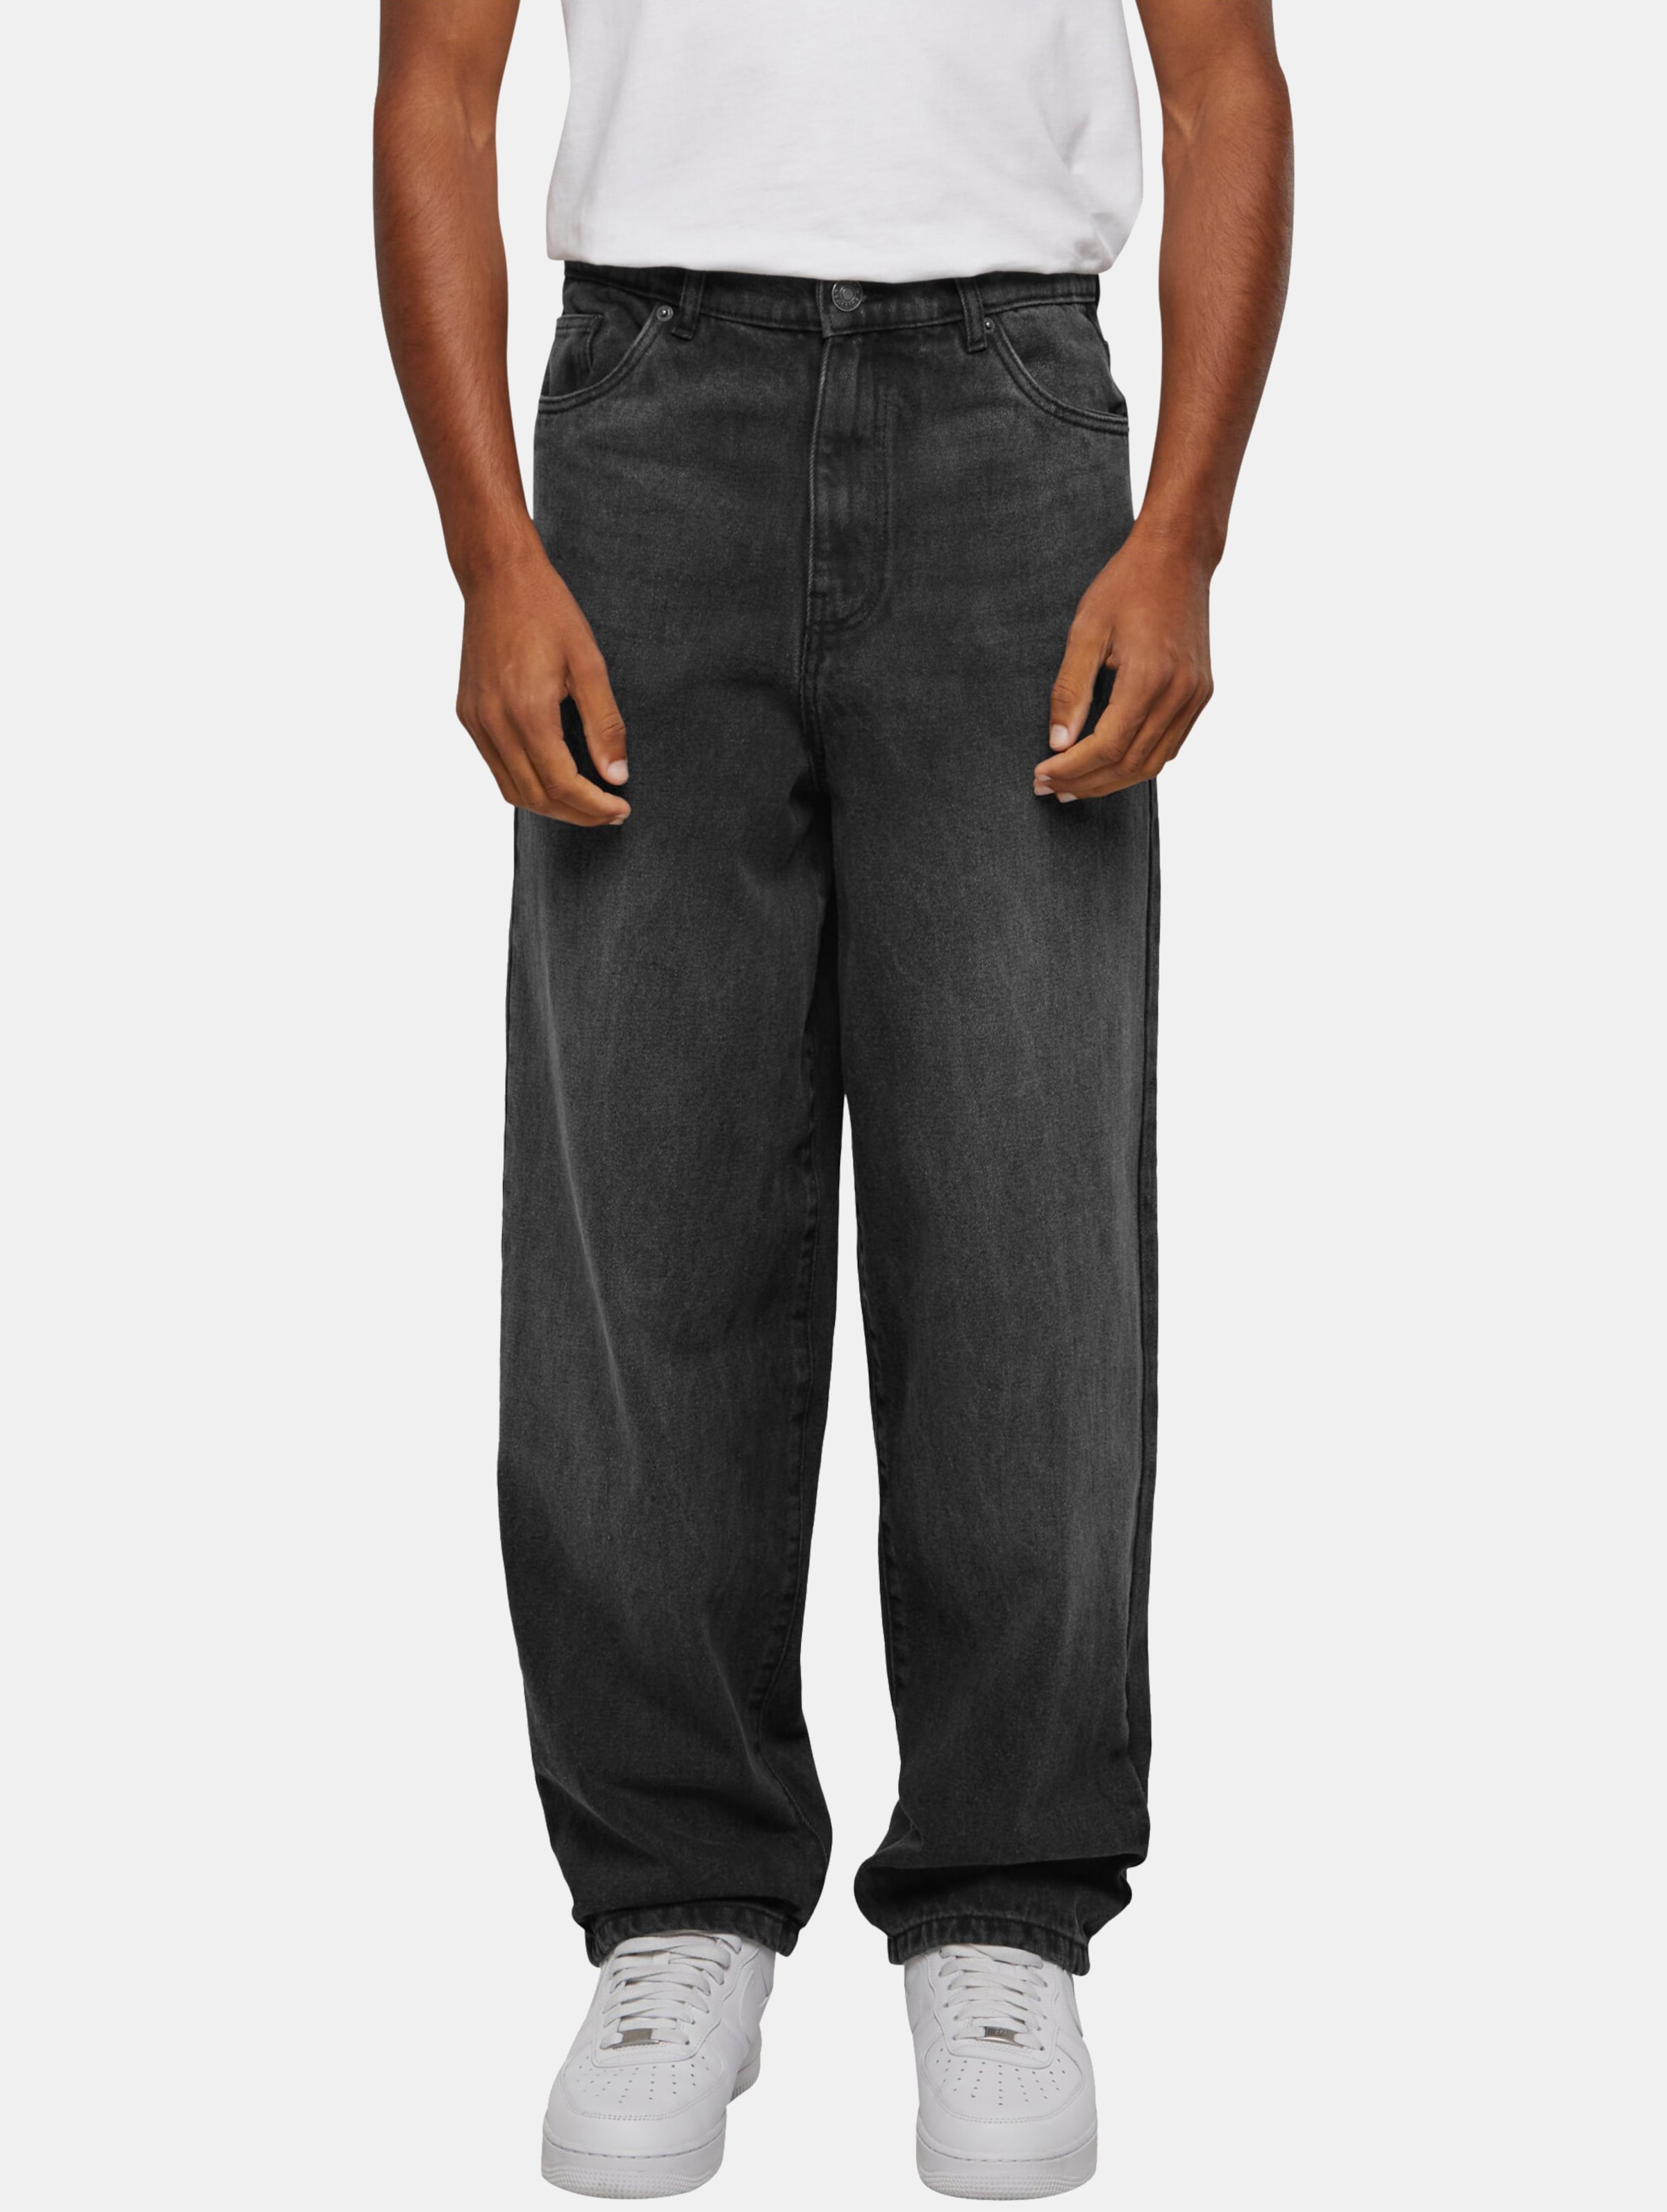 Urban Classics - Heavy Ounce Baggy Fit Jeans Wijde broek - Taille, 33 inch - Zwart